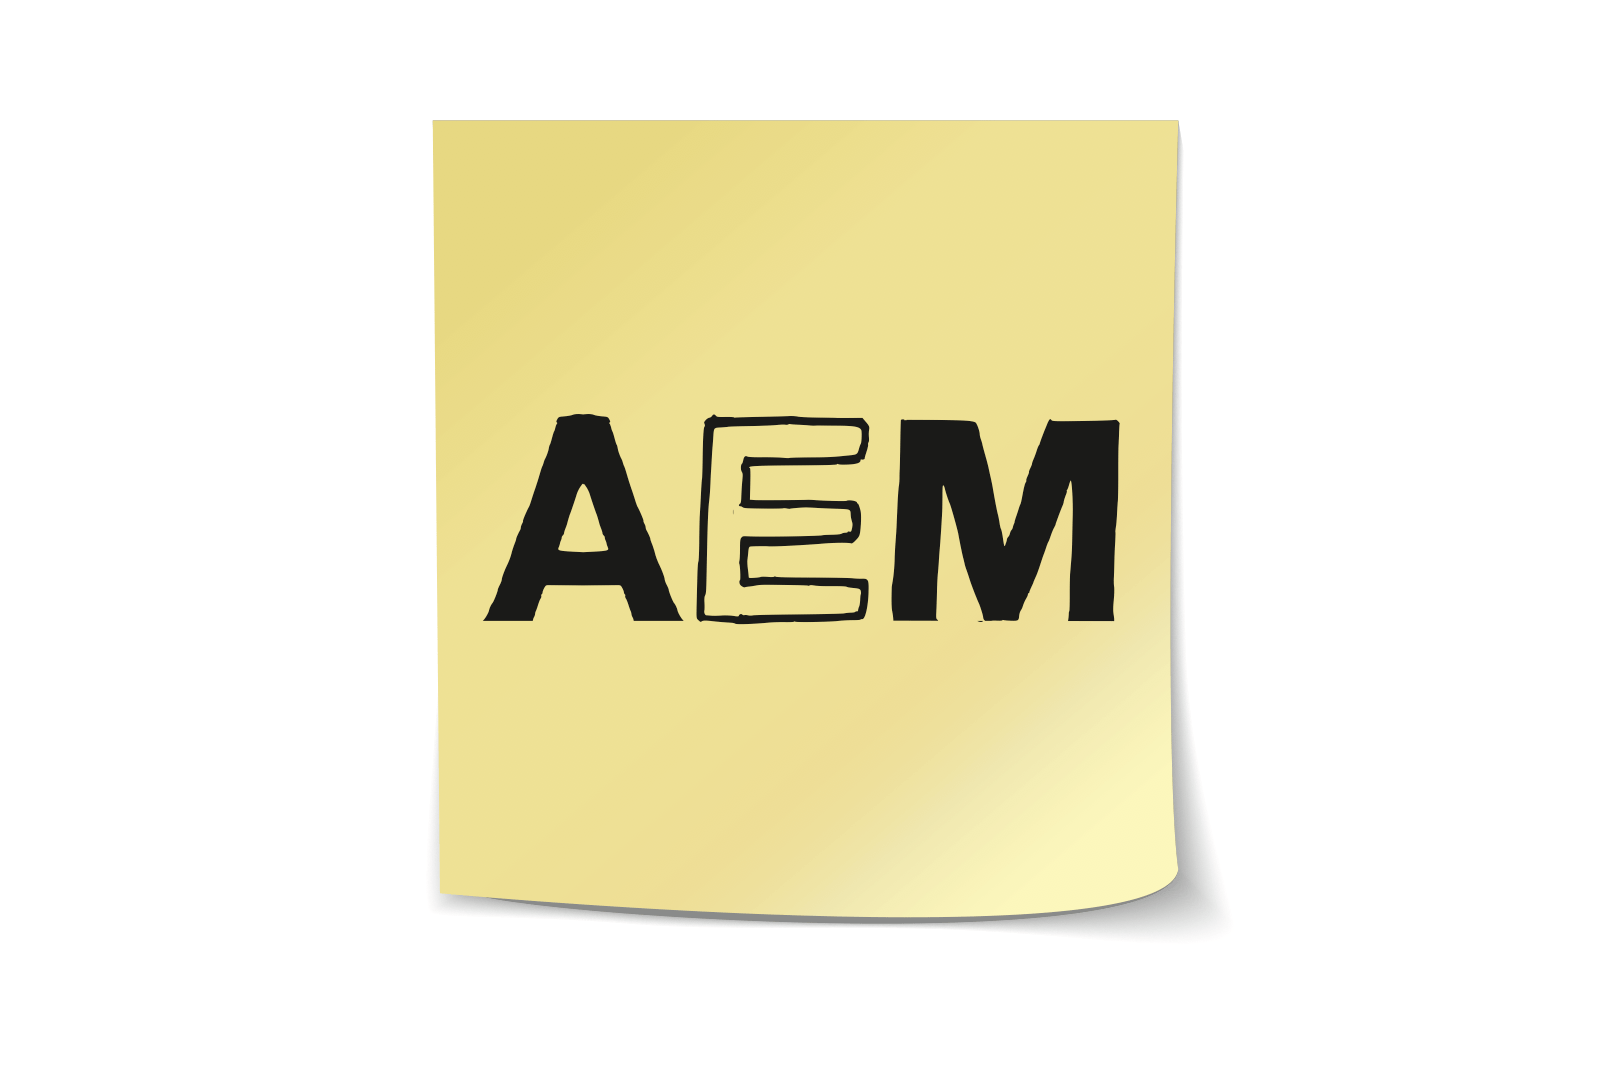 AEMという単語が付箋に書かれている